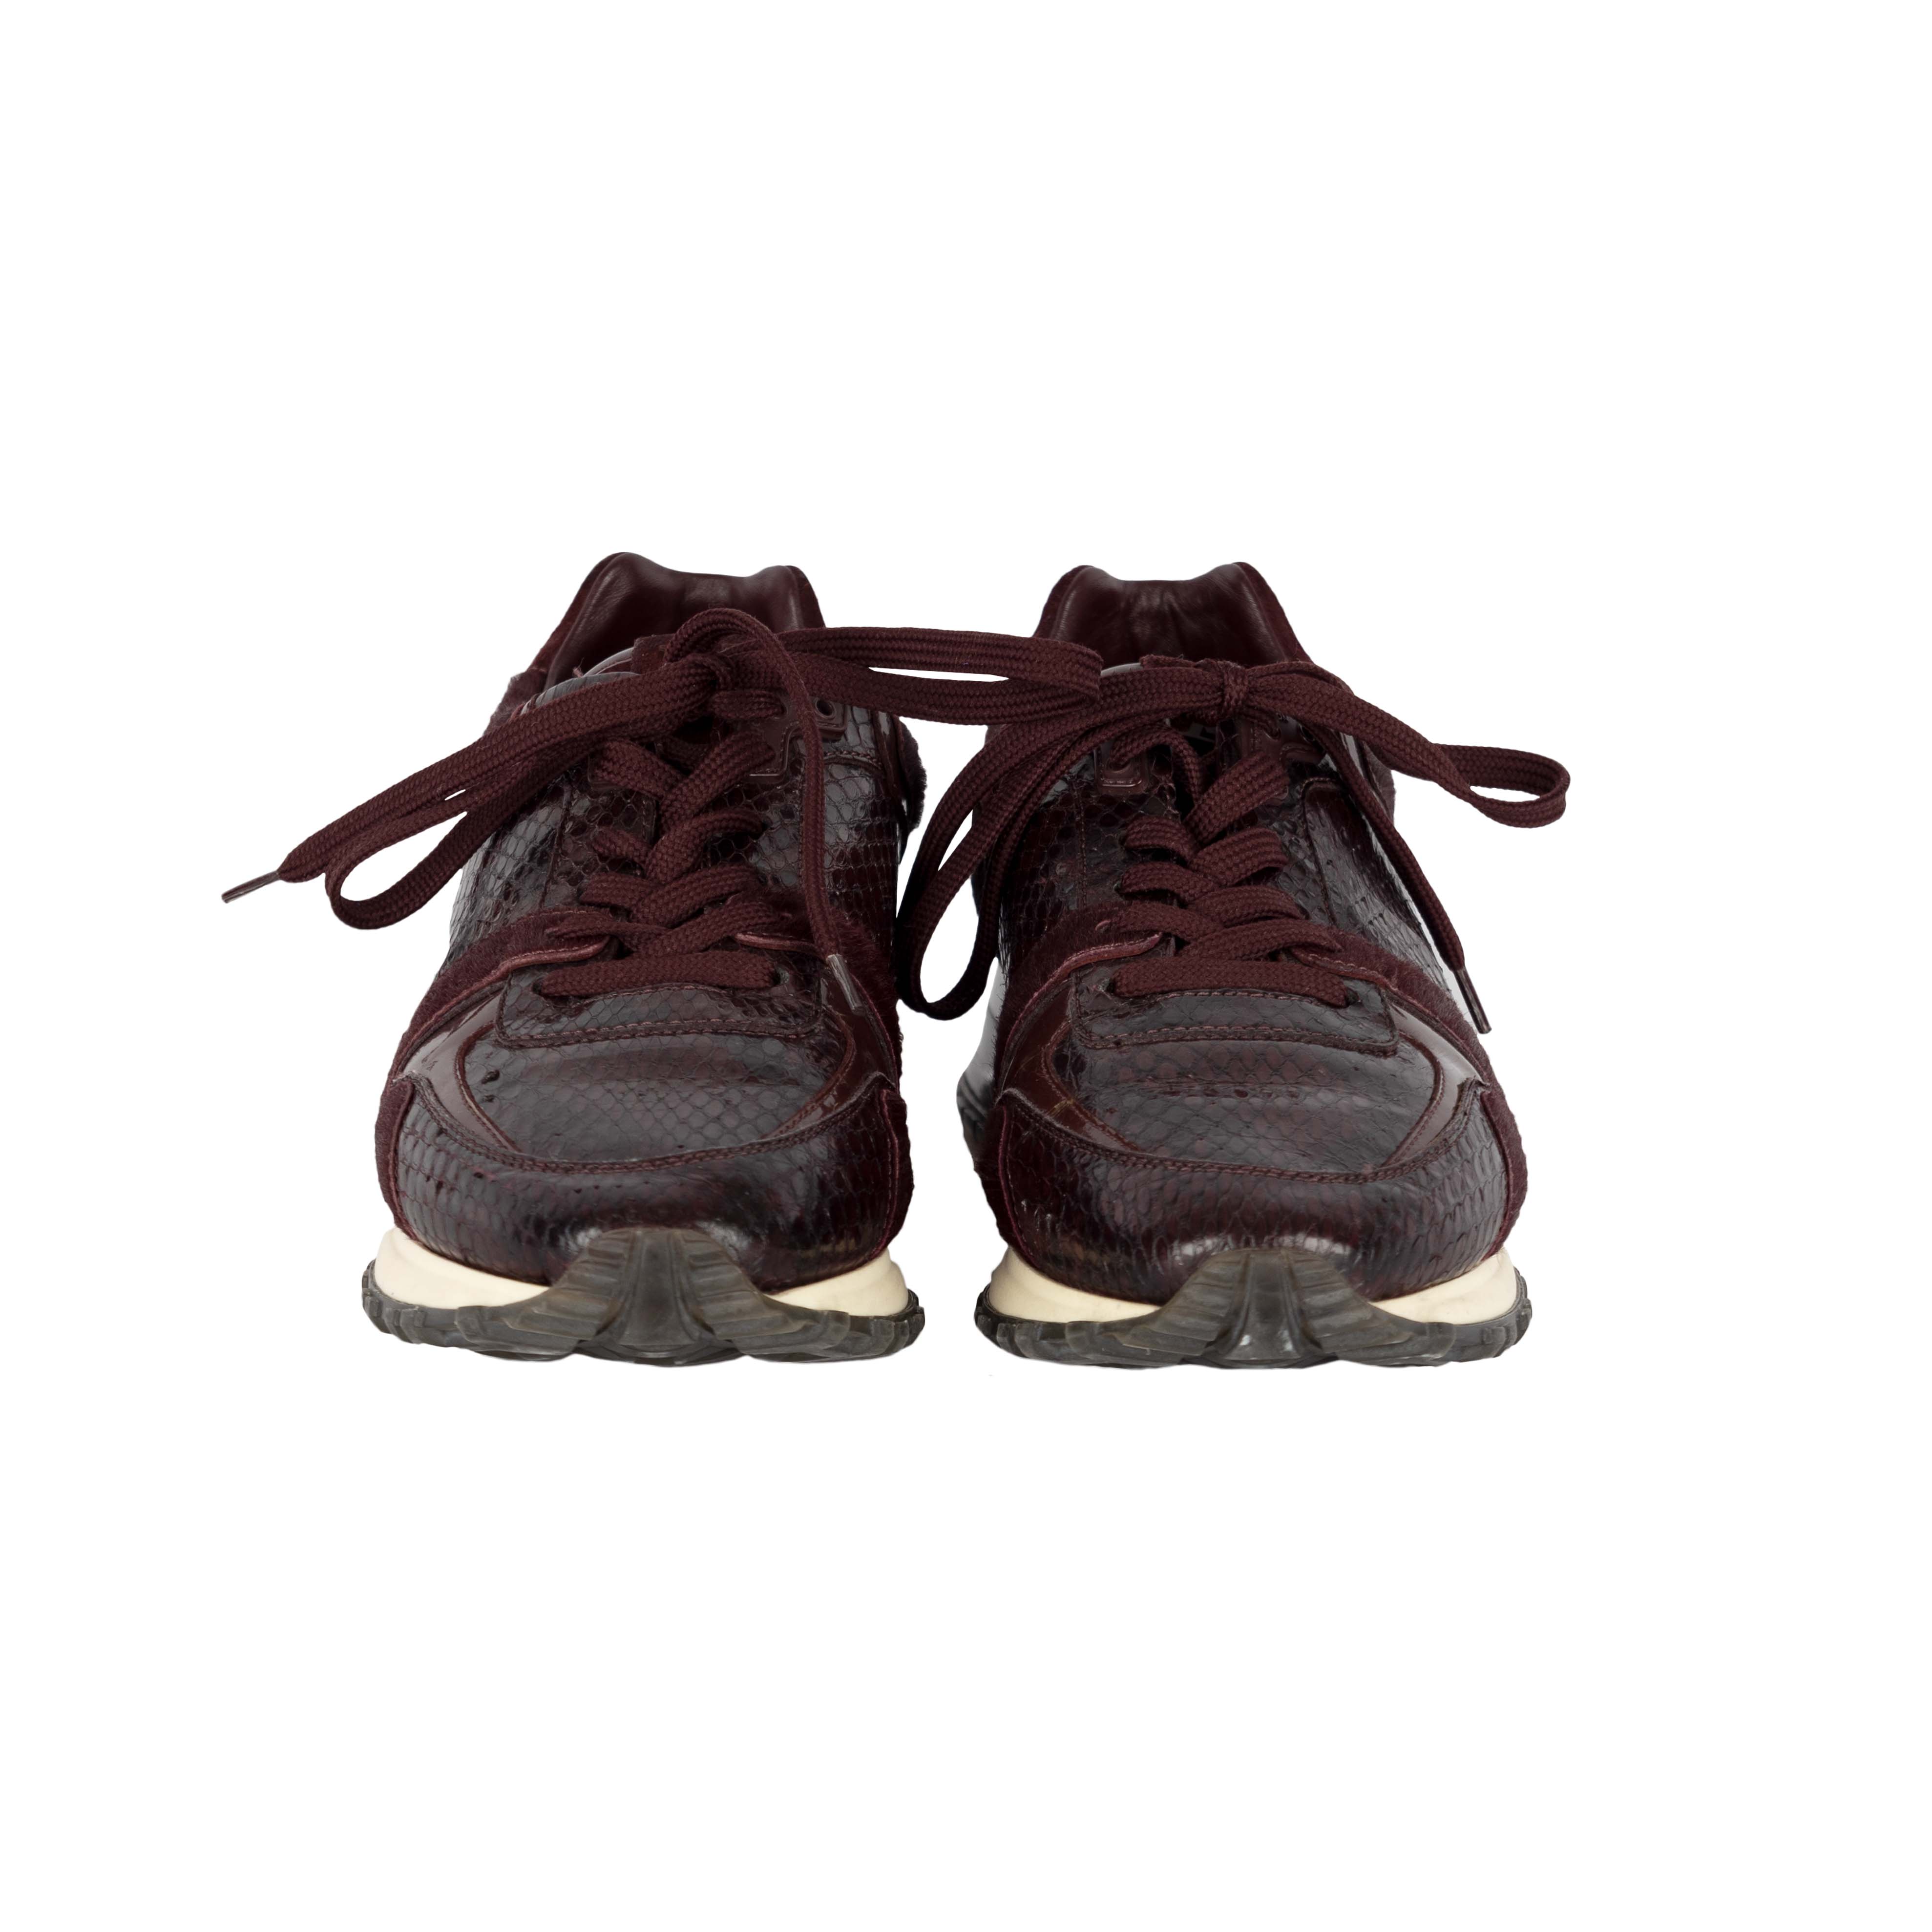 Louis Vuitton Run Away Sneaker Review